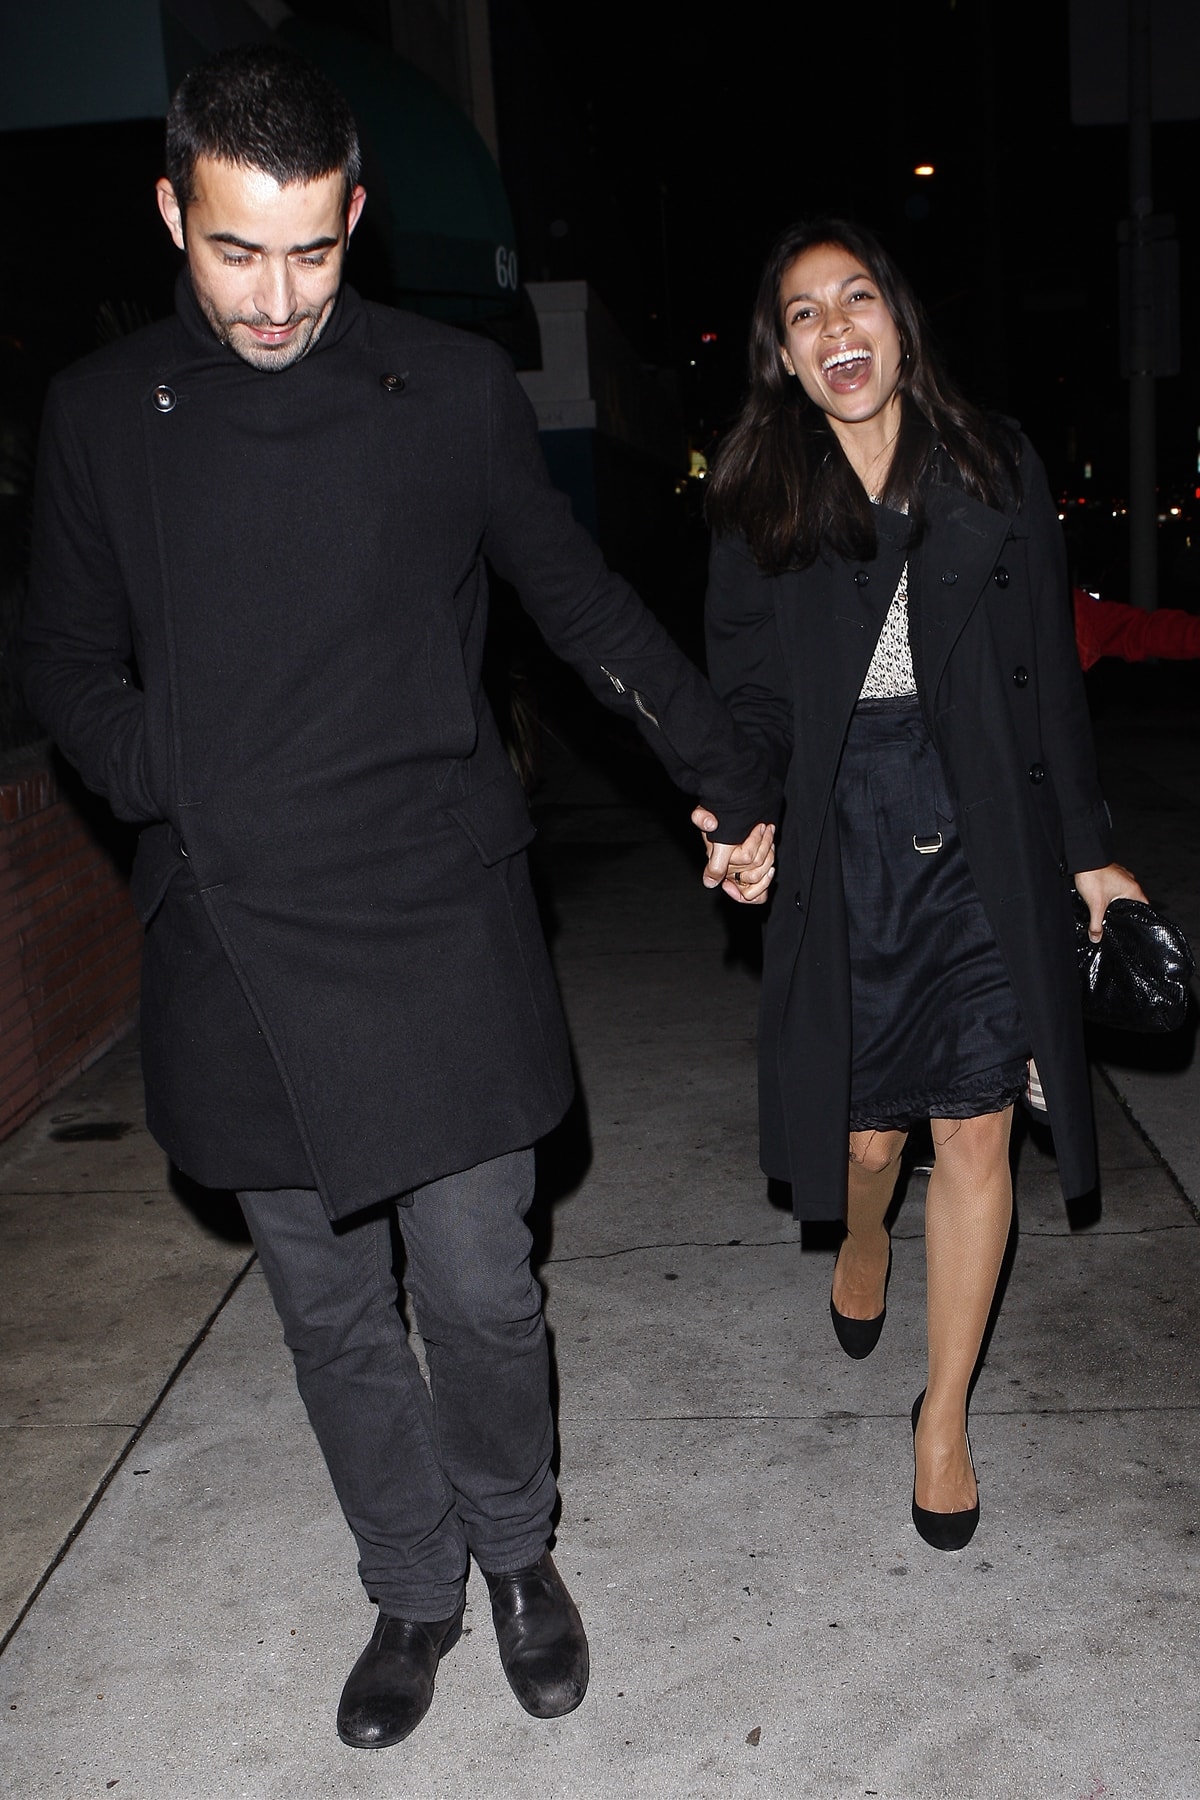 Mathieu Schreyer and his girlfriend Rosario Dawson leave La Vida restaurant in Hollywood